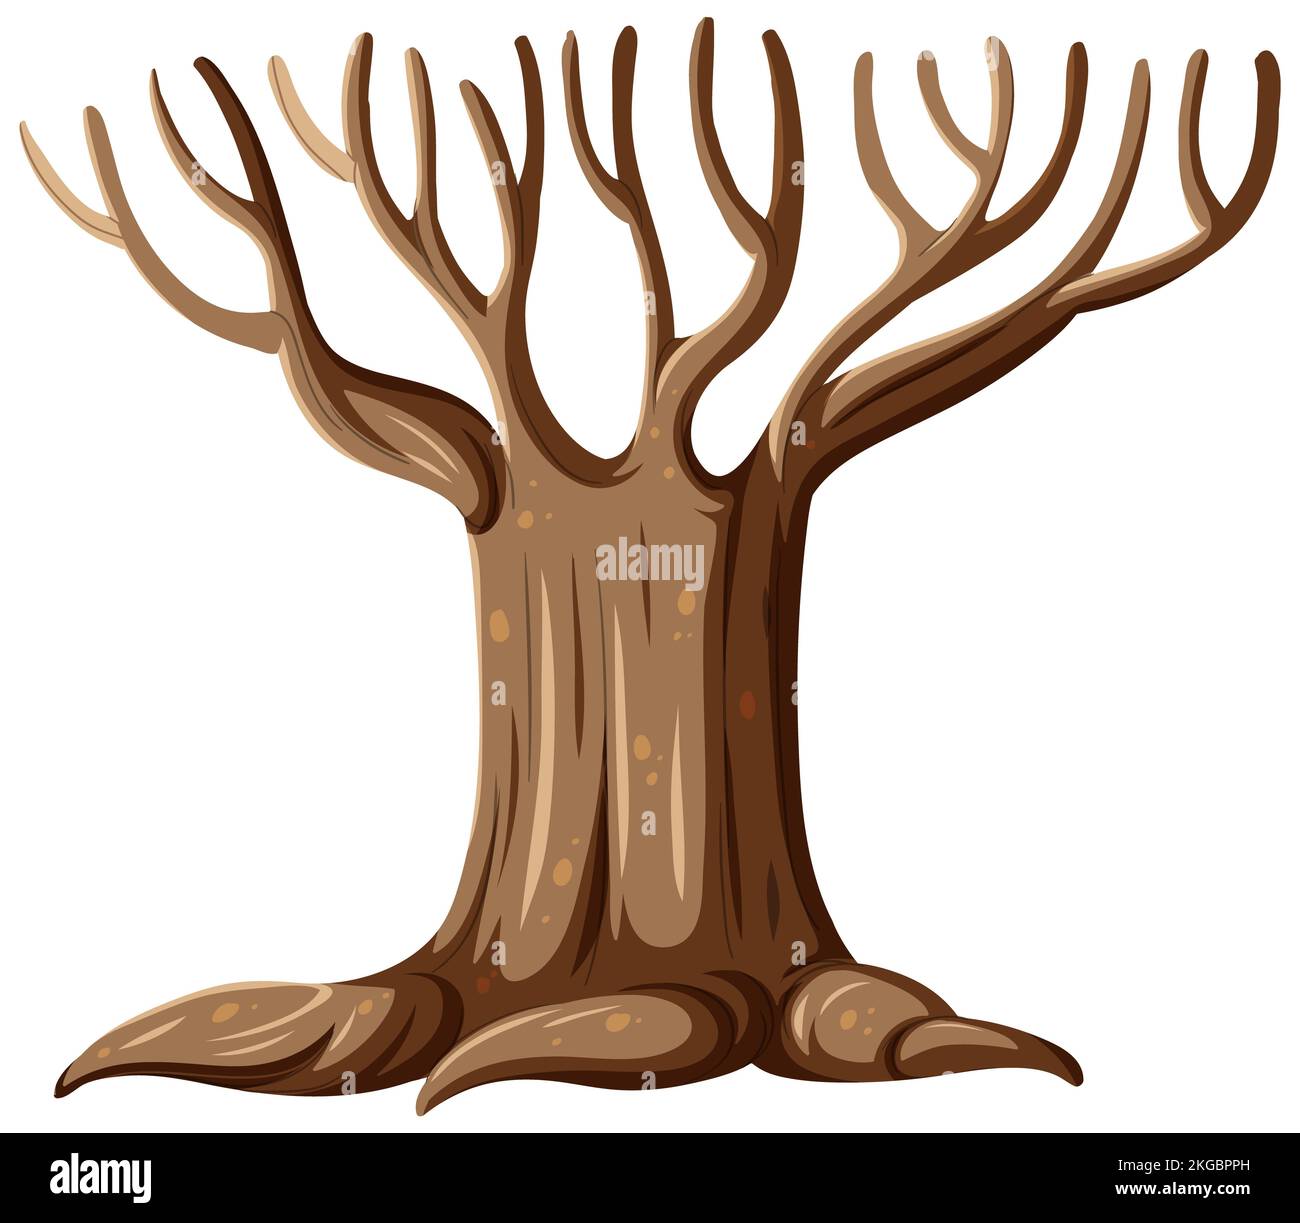 Isolated tree without leaves cartoon illustration Stock Photo - Alamy